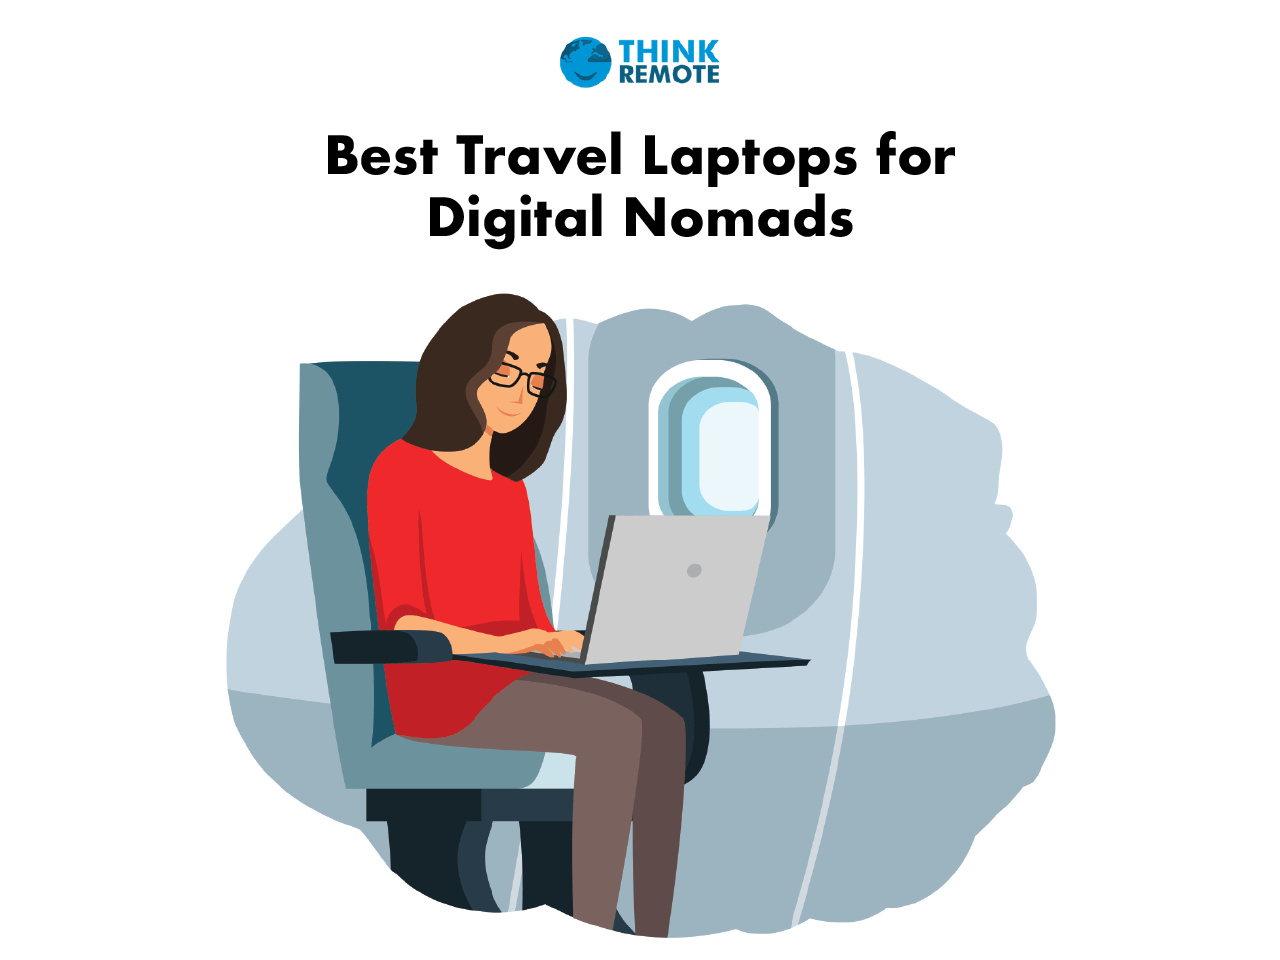 Boekhouder Bedenken Ervaren persoon 13 Best Travel Laptops for Digital Nomads - ThinkRemote